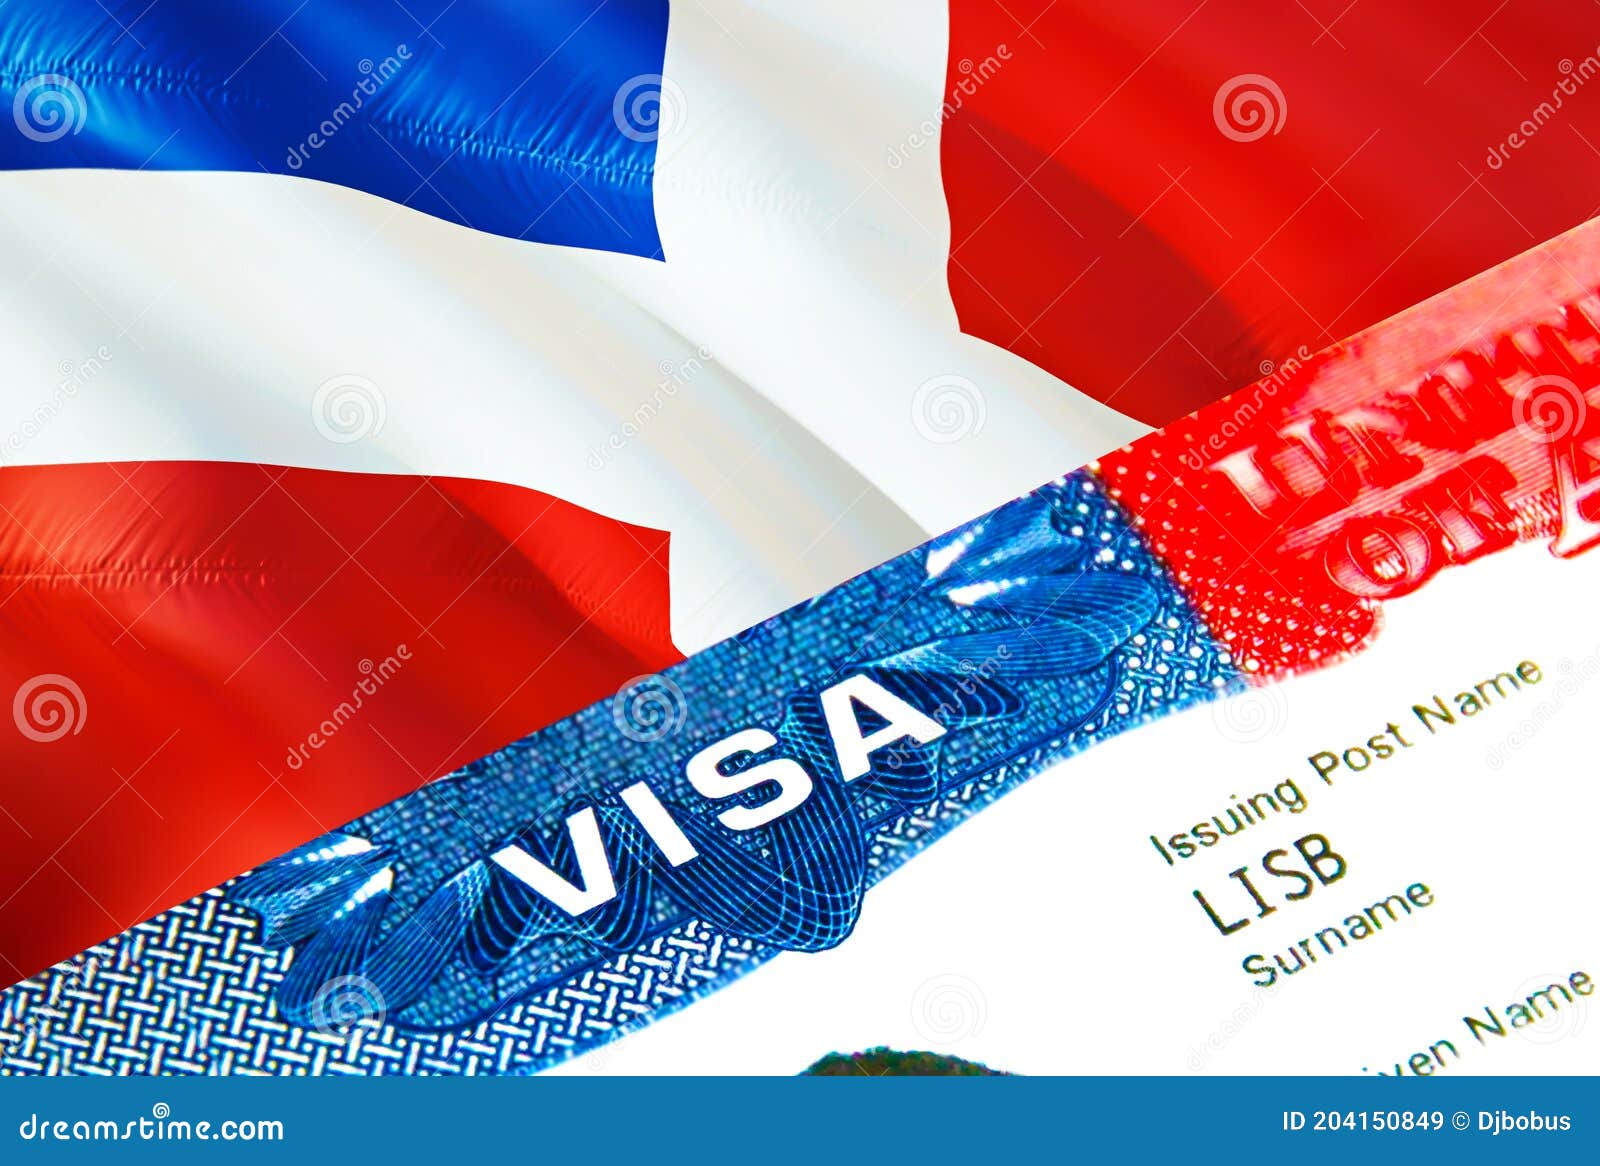 dominican republic visit visa